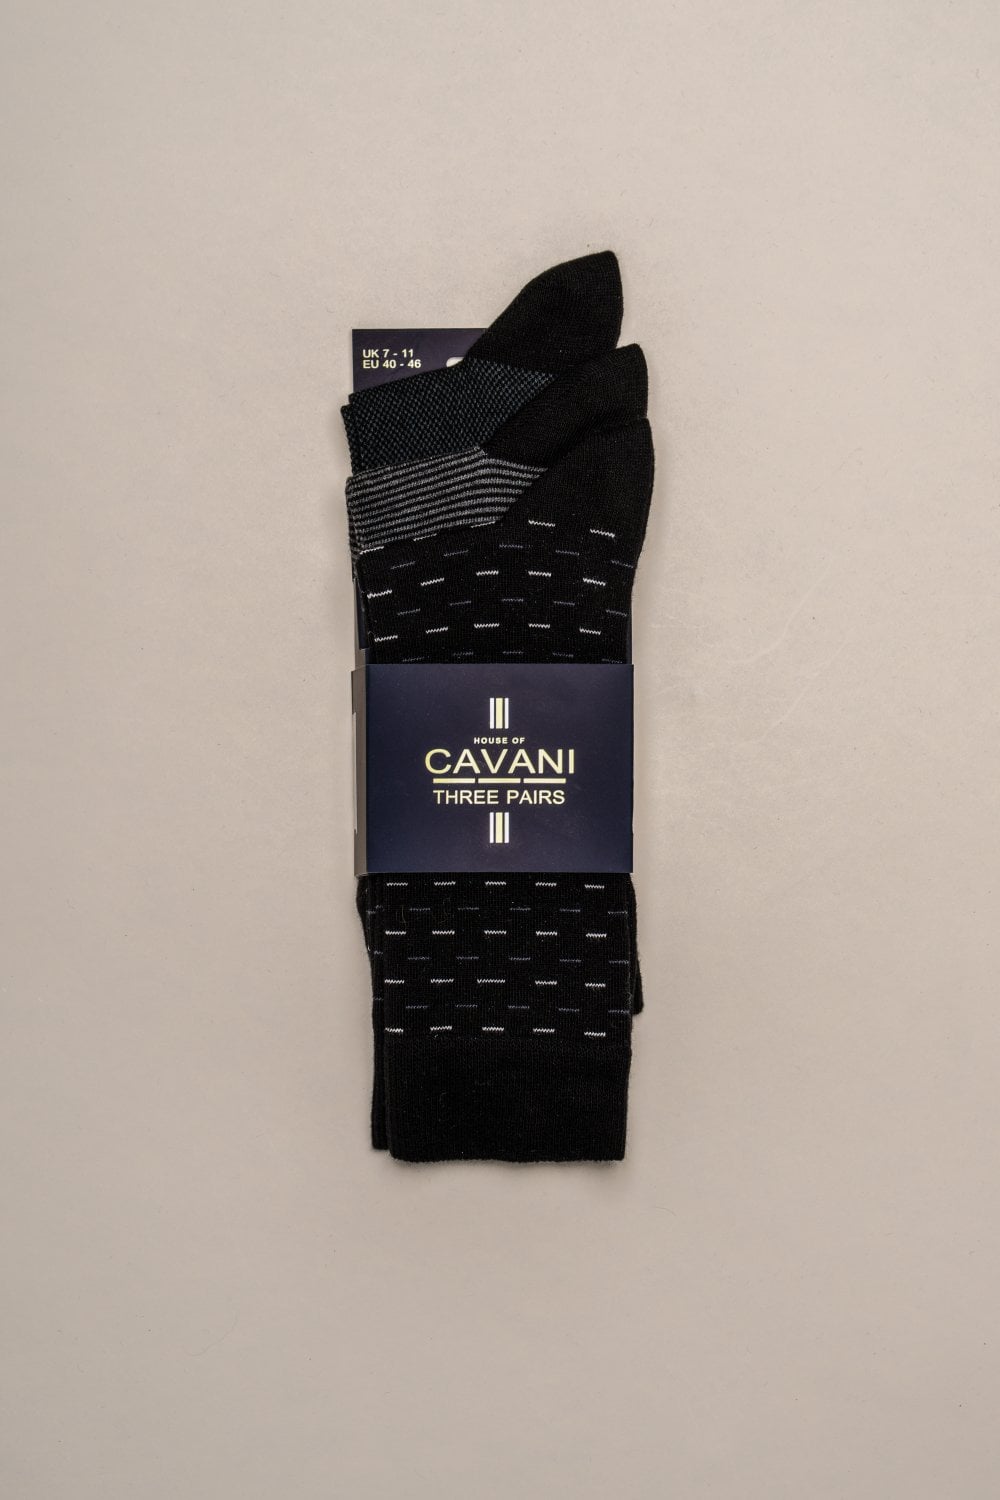 Chaussettes Cavani Tarossa 3 paires - Gentleman set